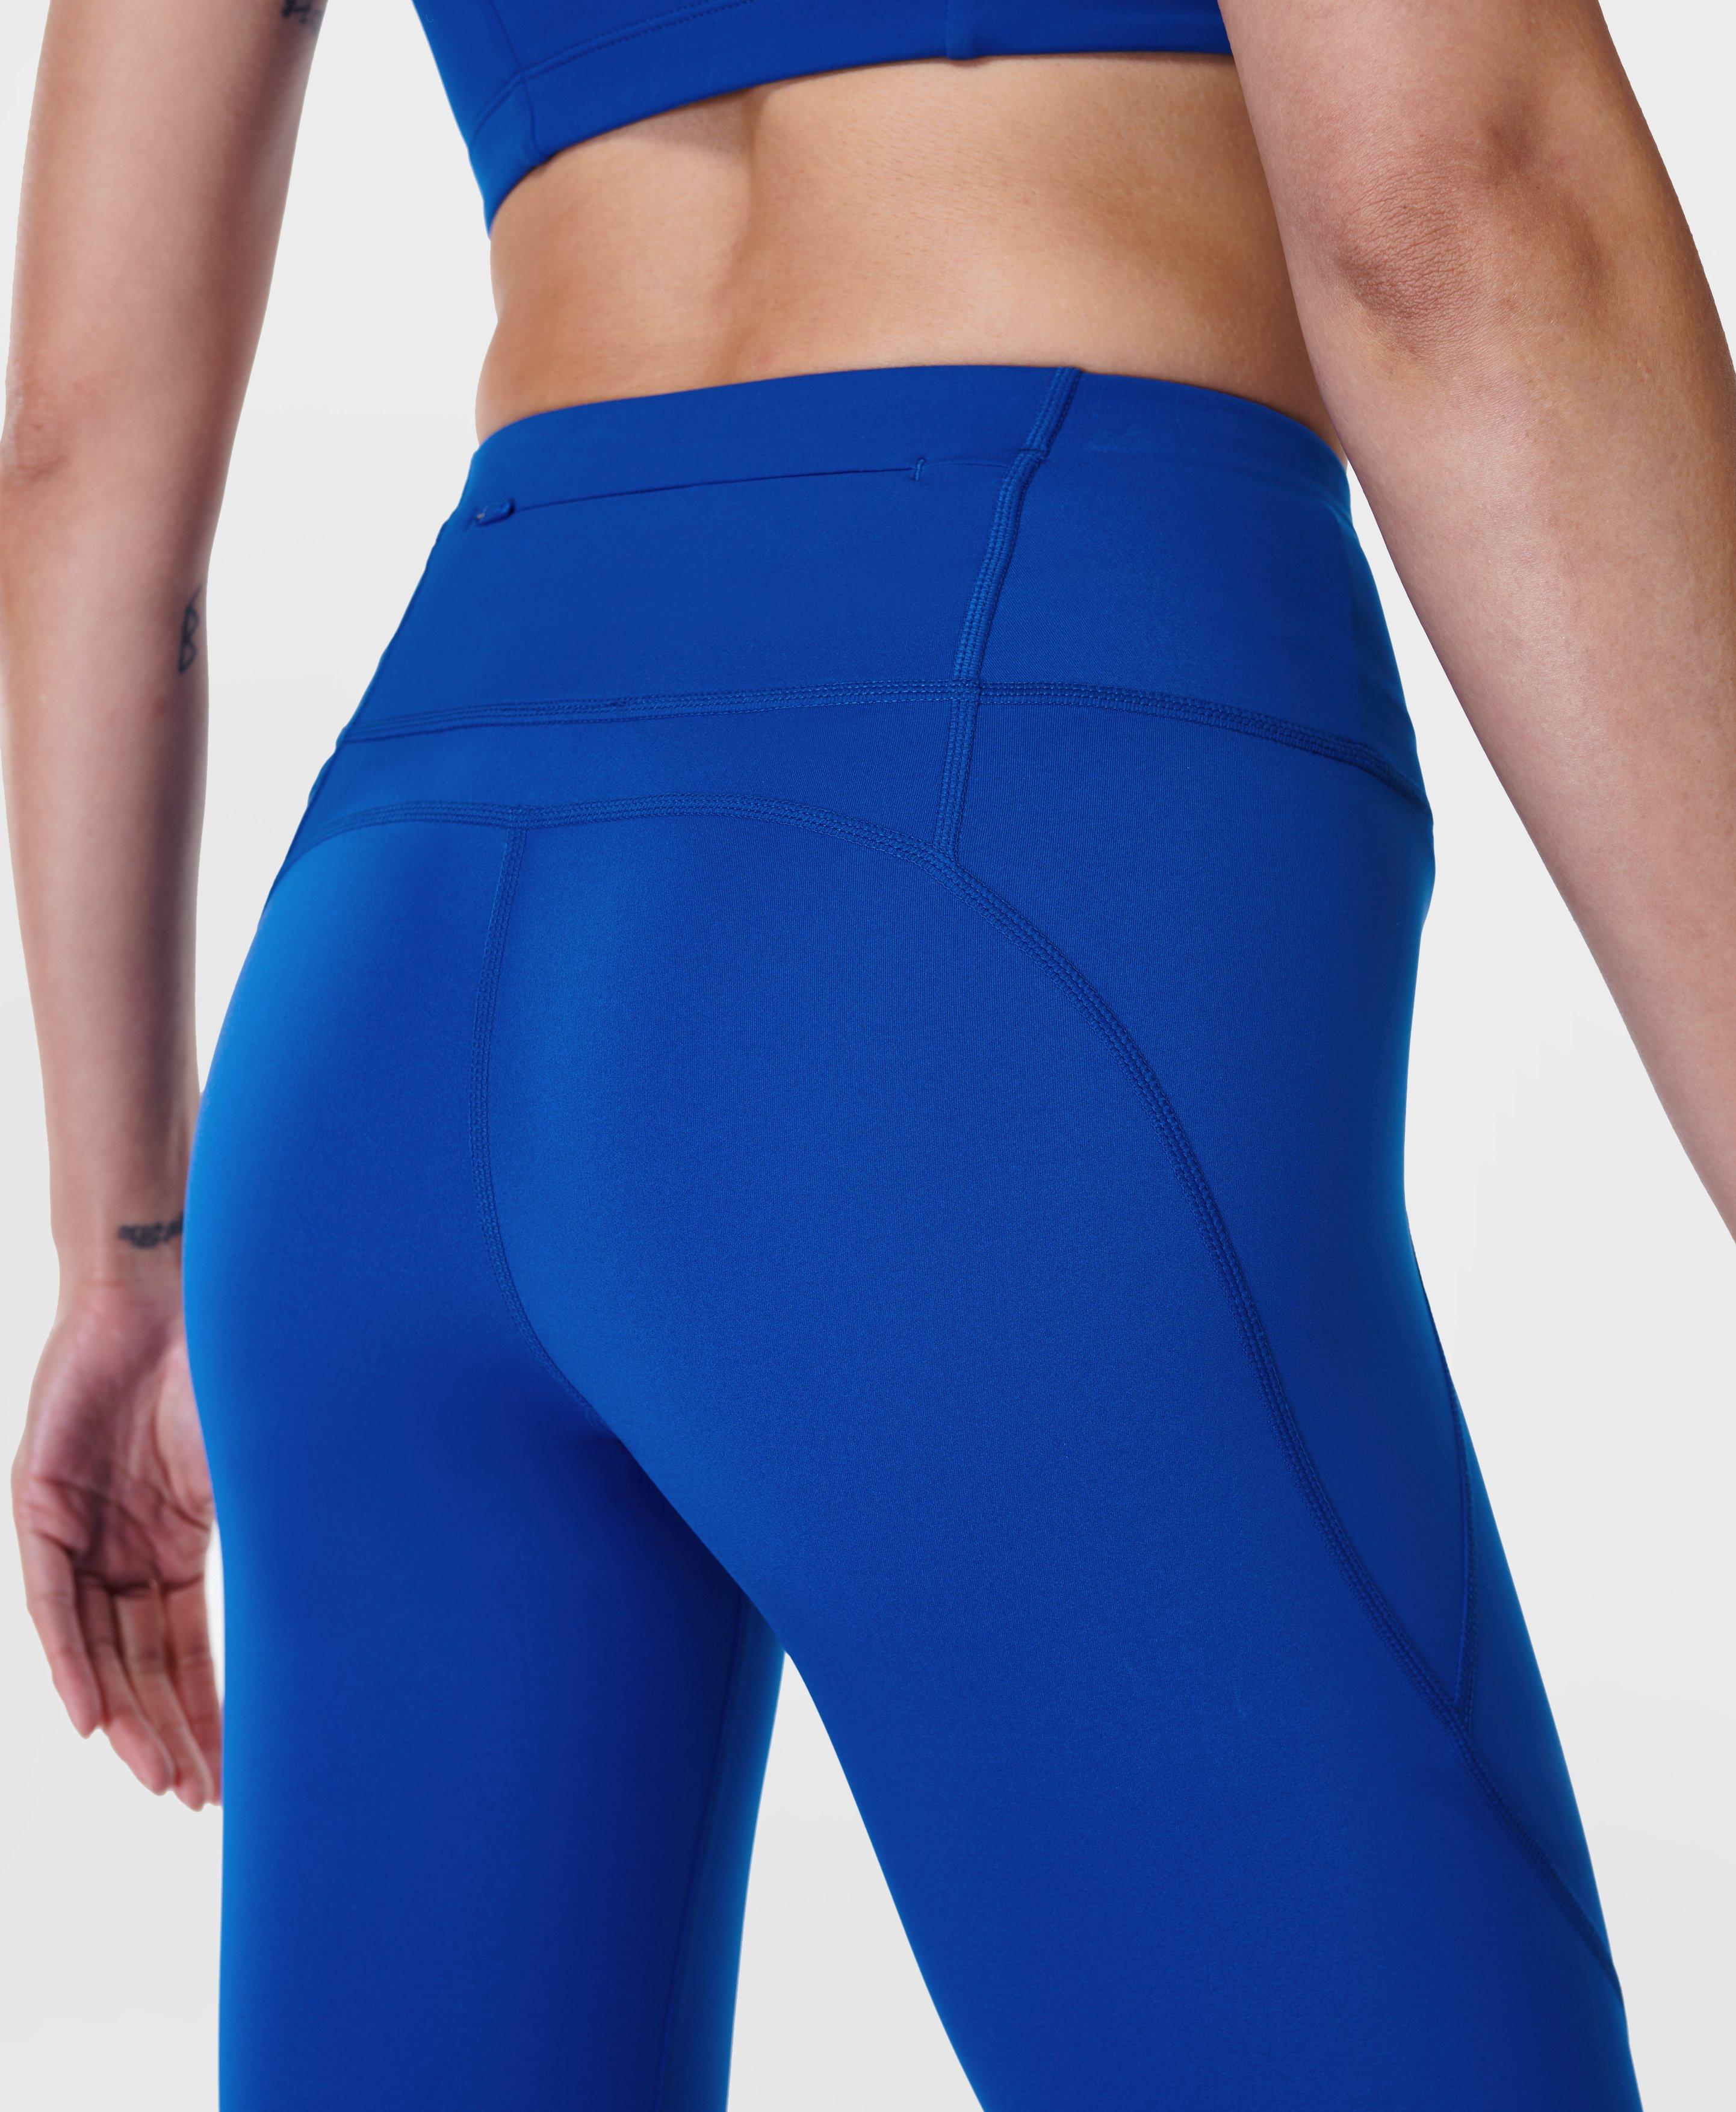 Women's High Waisted Yoga Leggings Workout Pants - Steel Blue / S